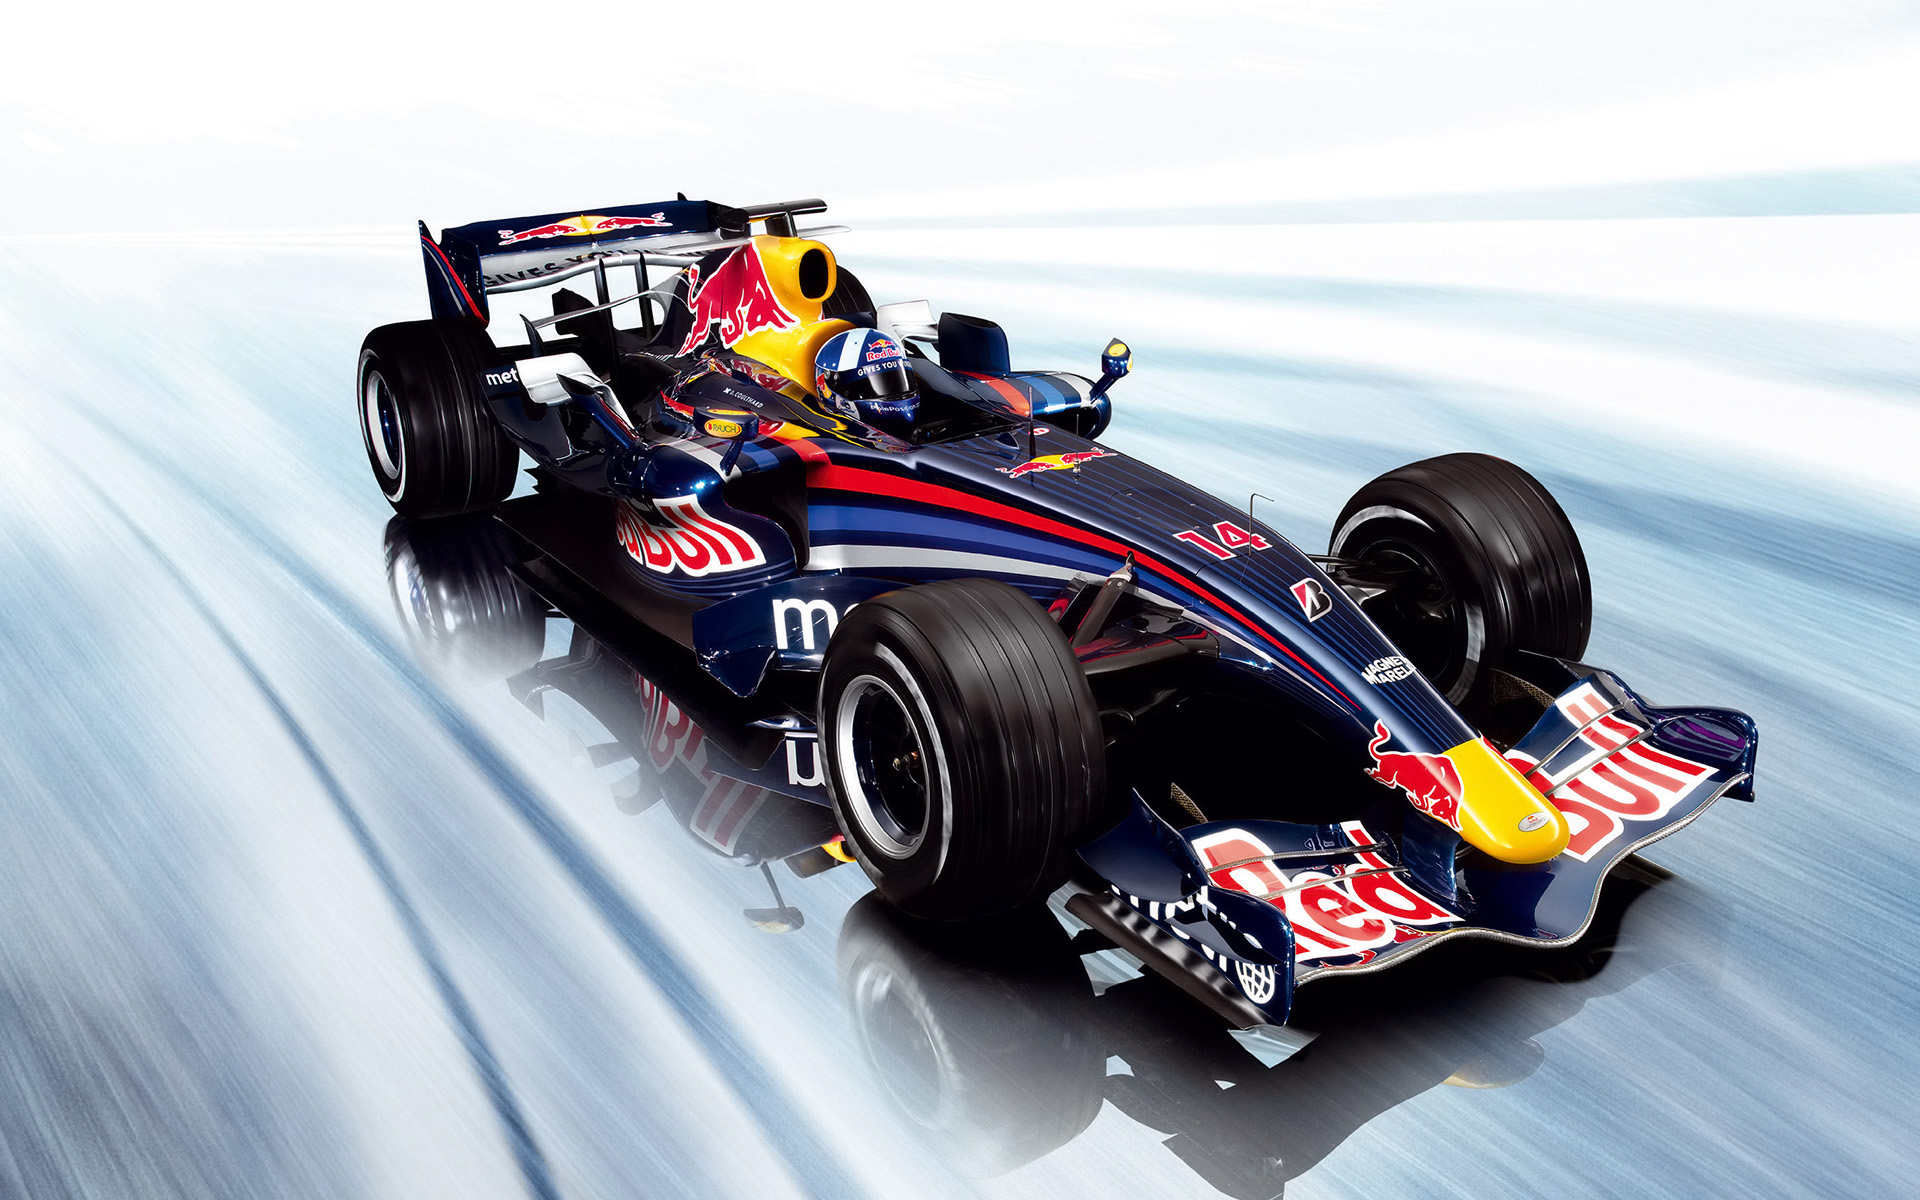 Télécharger des fonds d'écran Red Bull Racing Rb3 HD